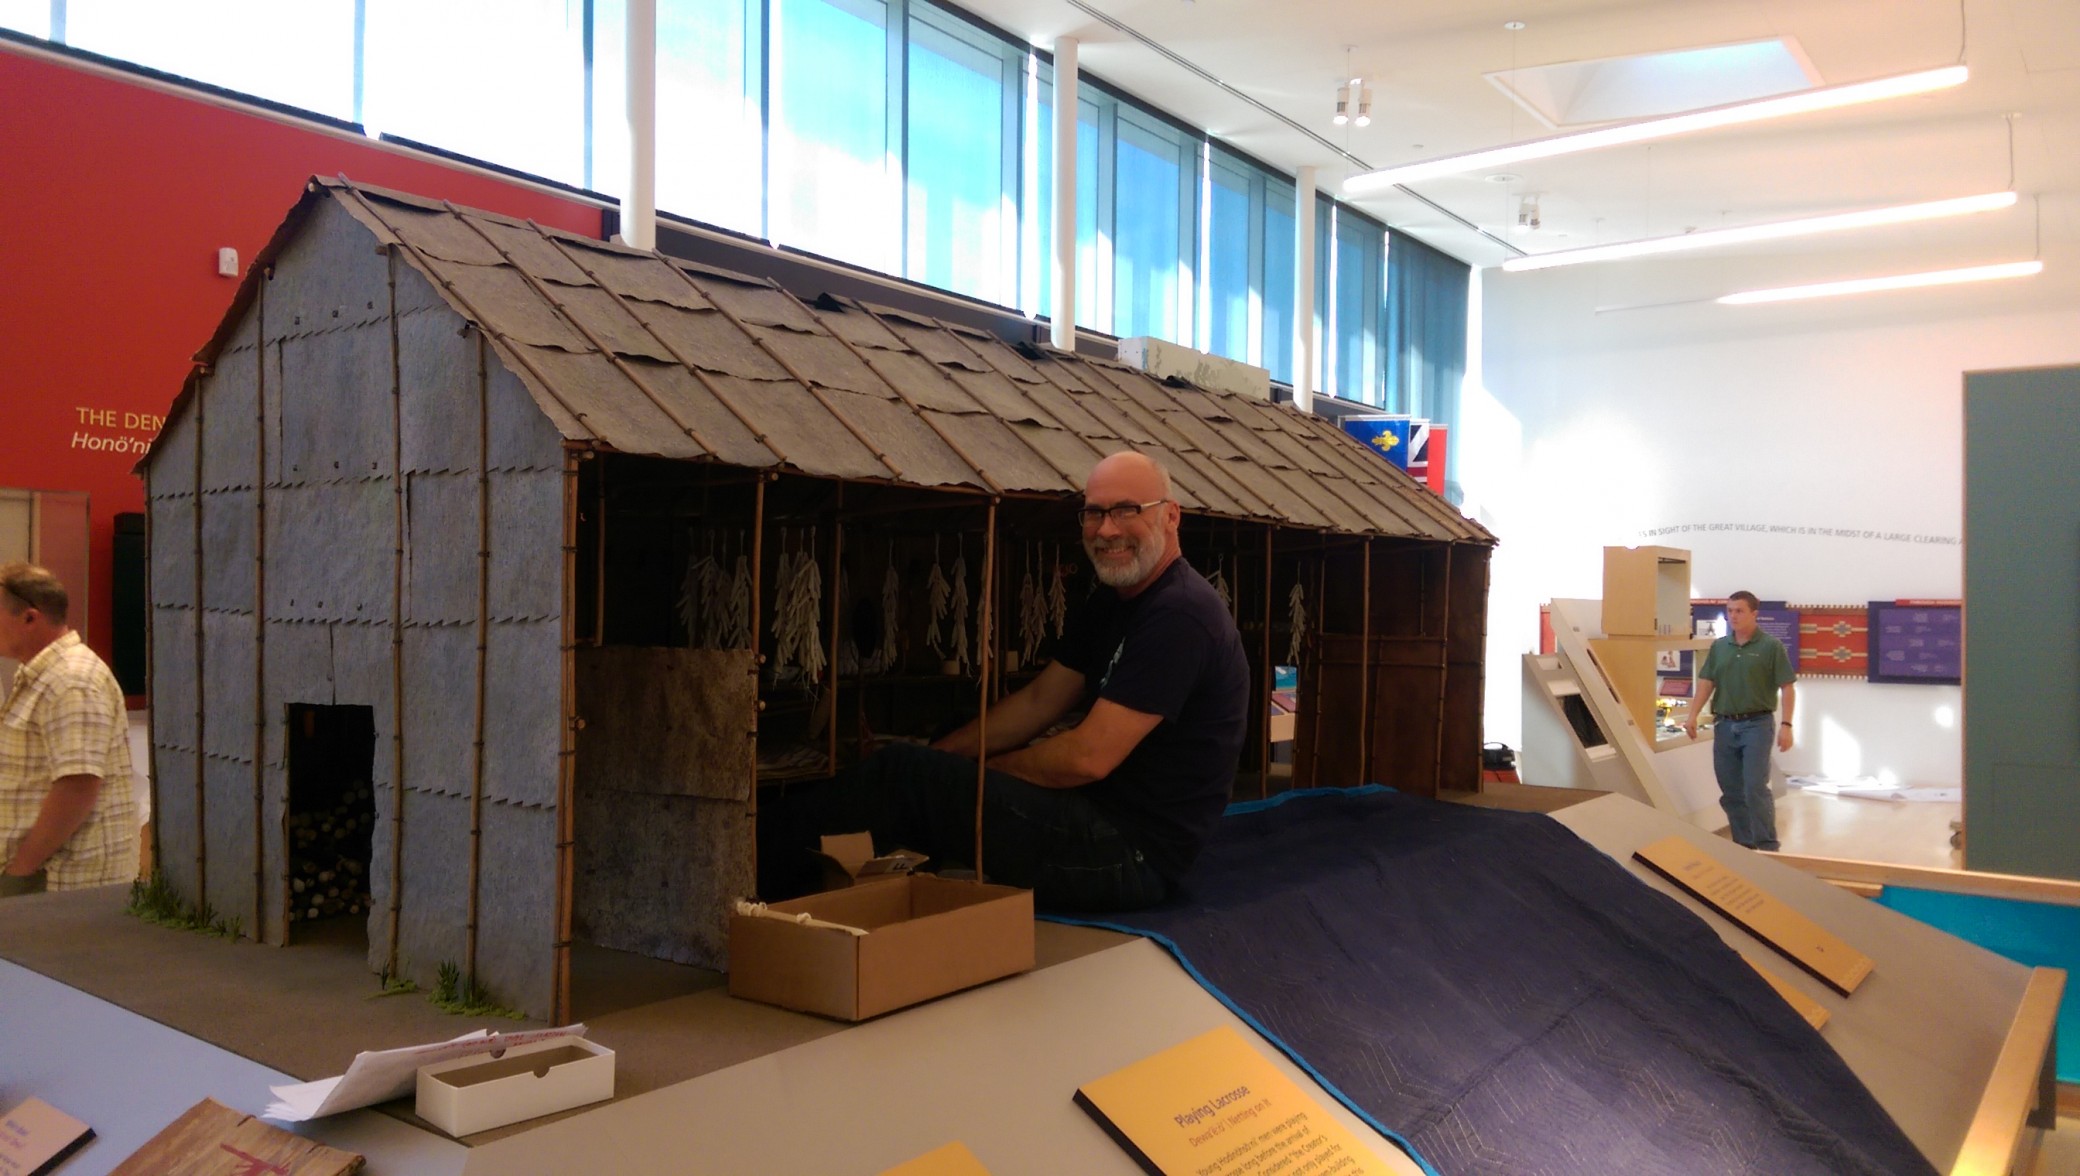 historical model of longhouse